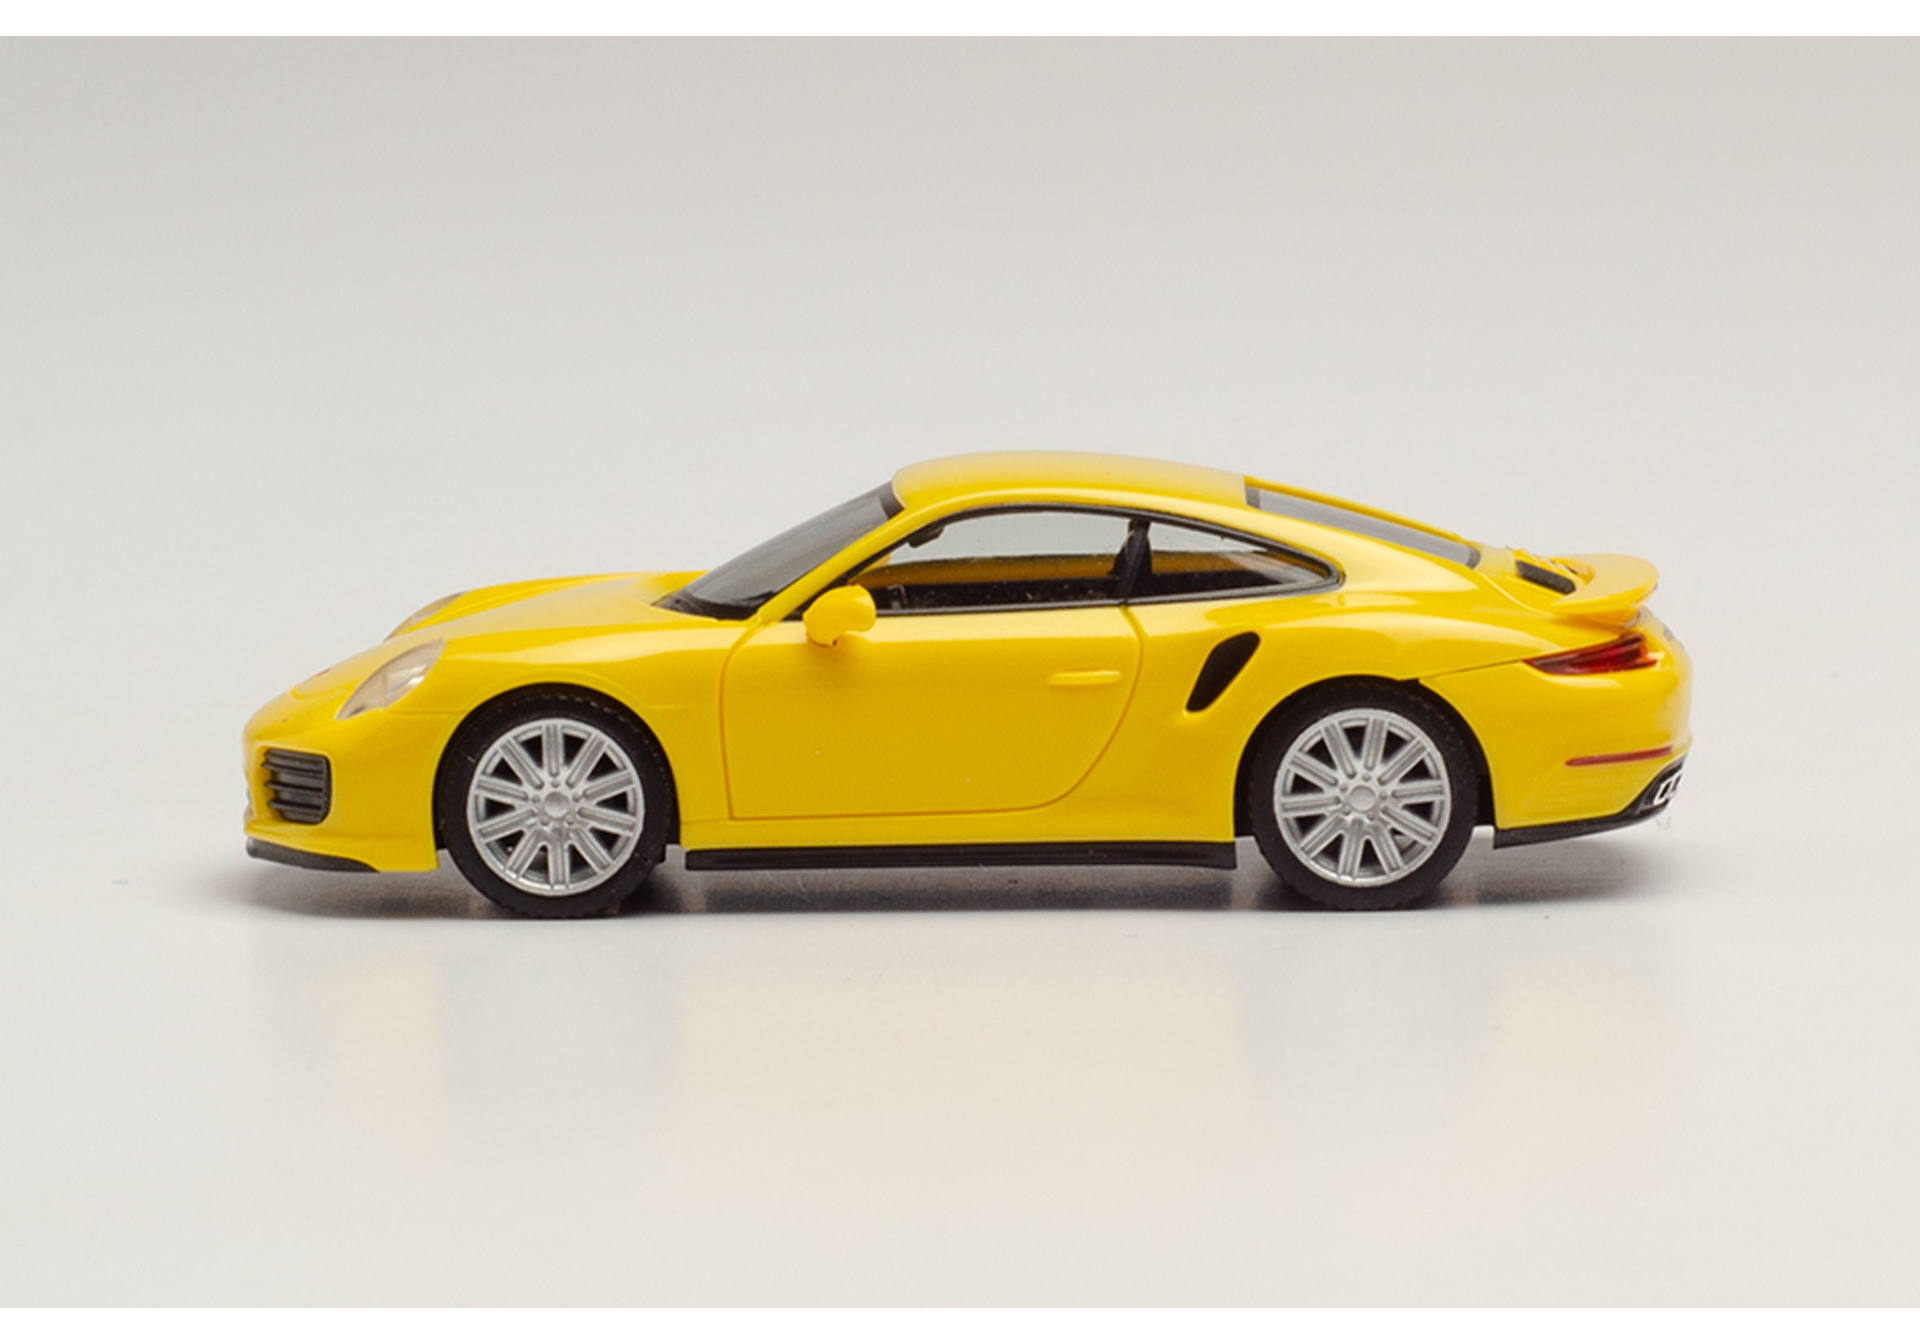 Porsche 911 Turbo, racing yellow